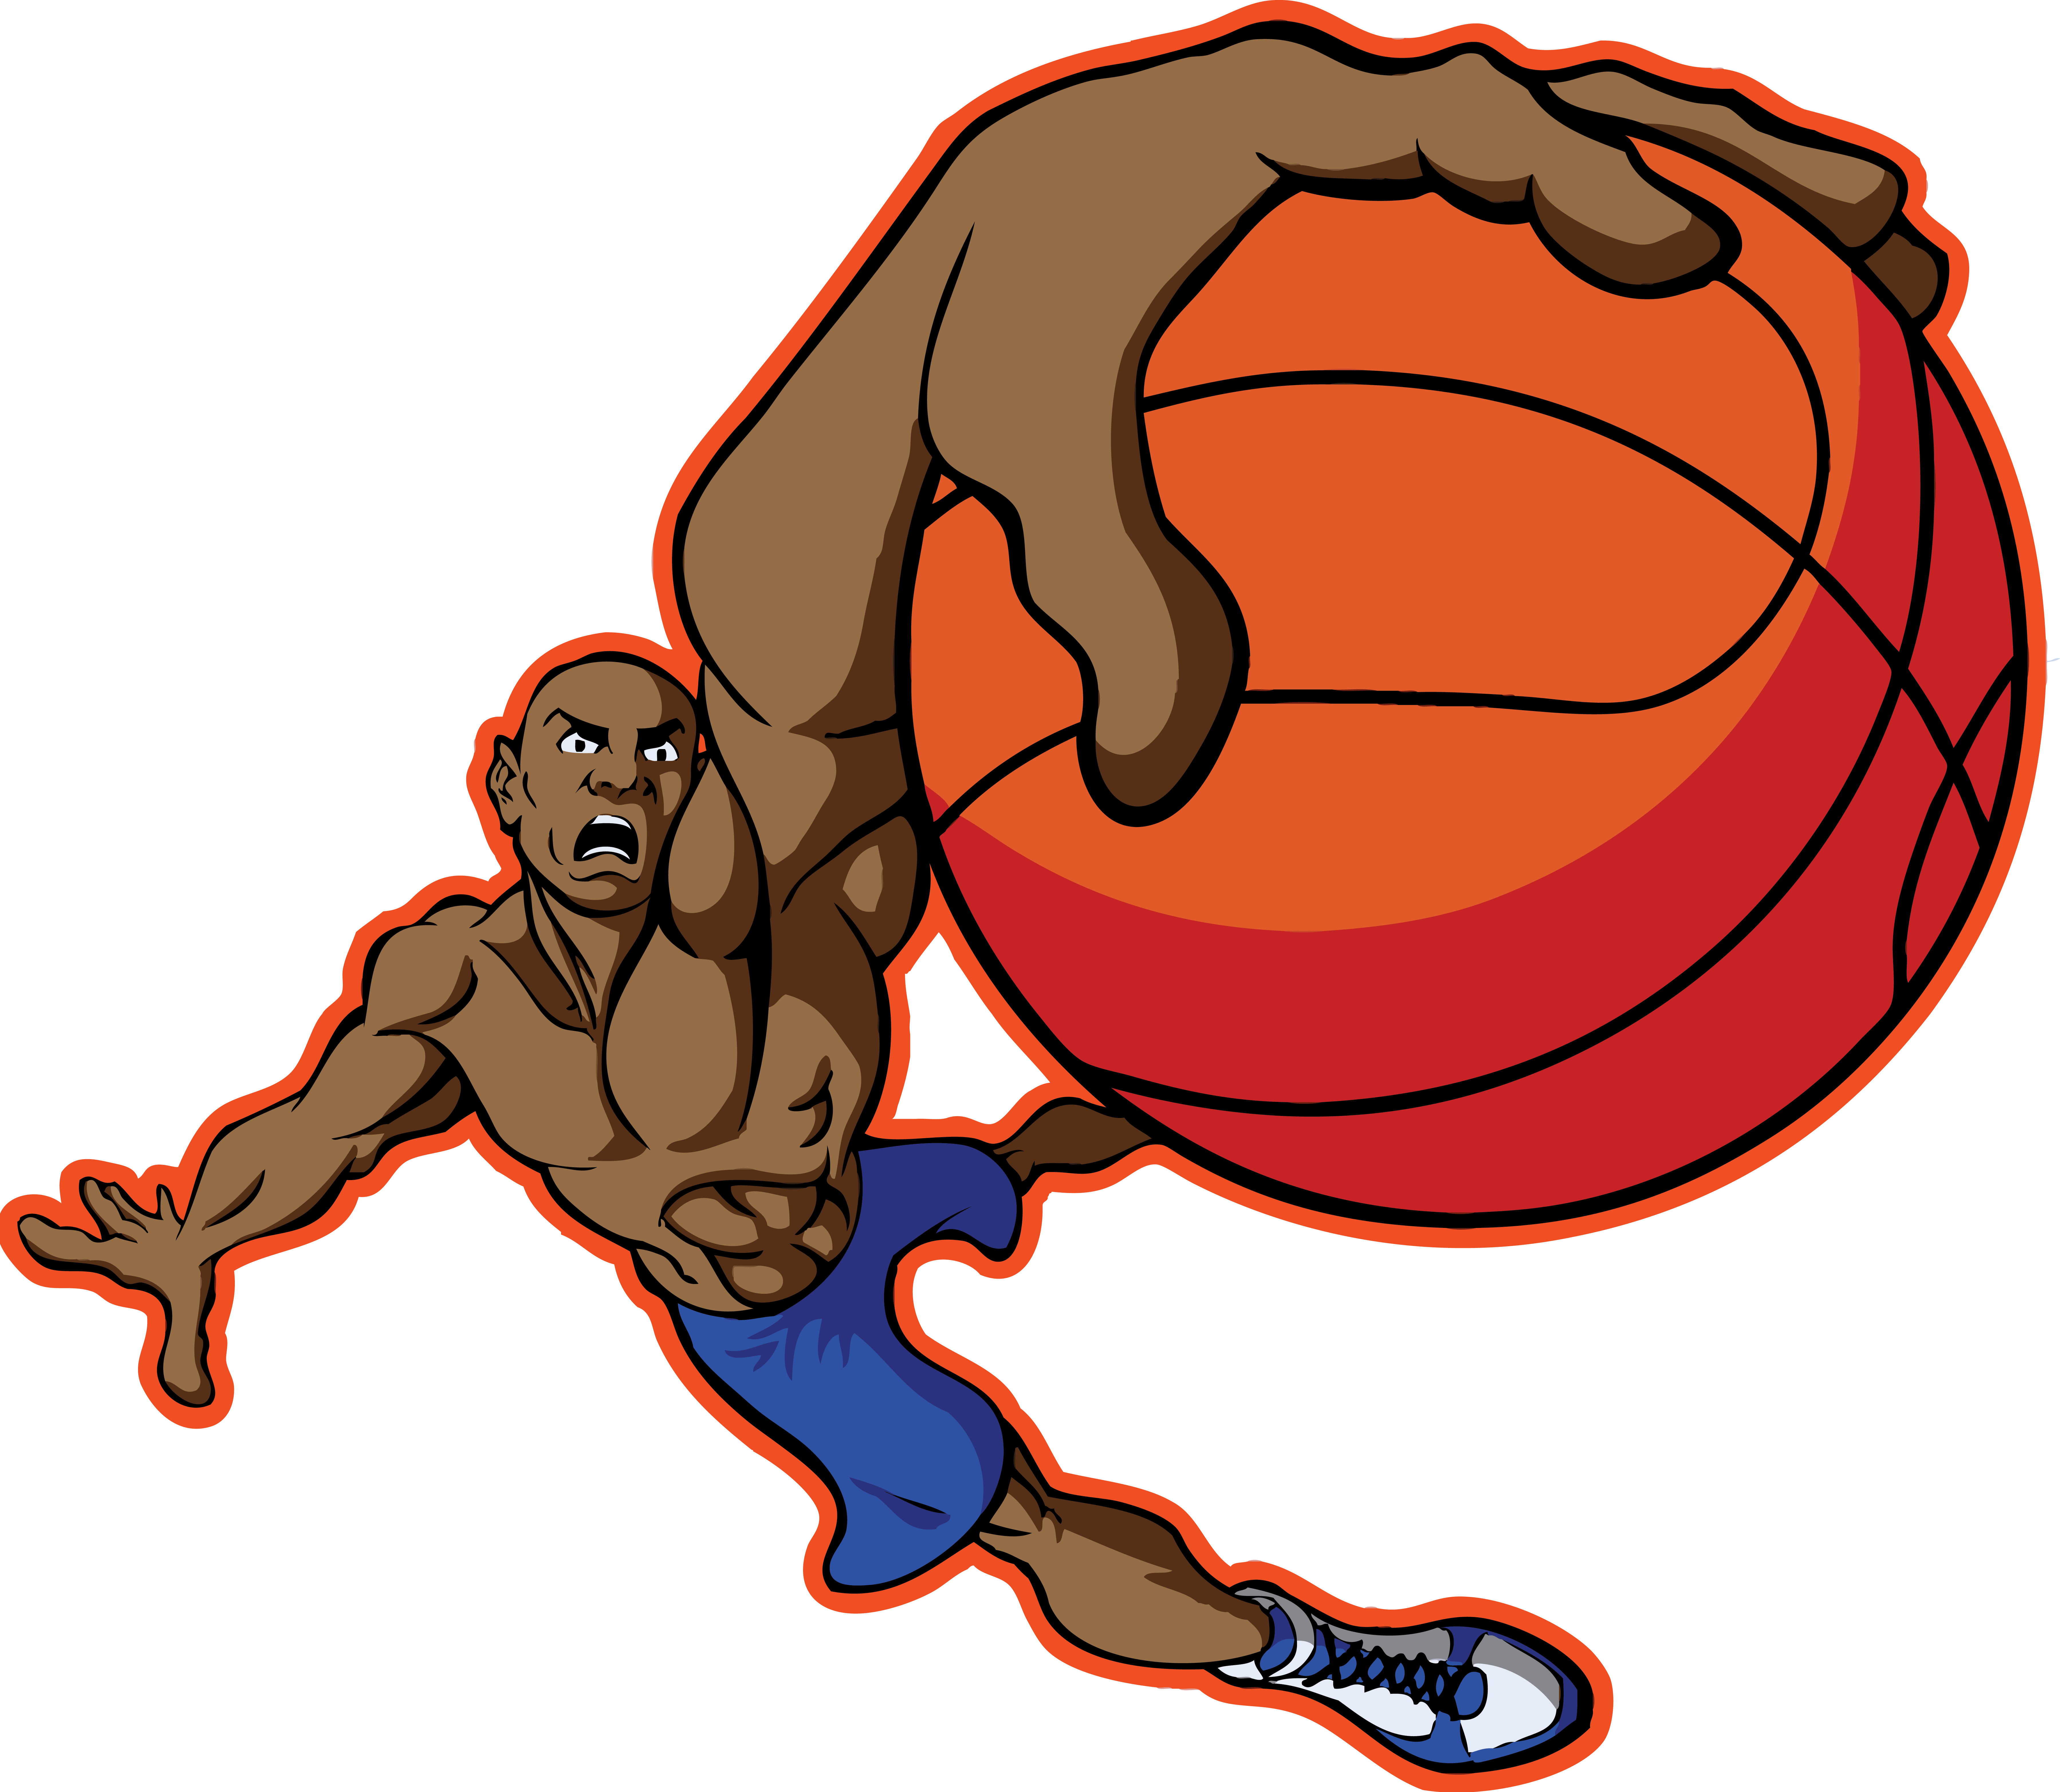 Basketball Cartoon